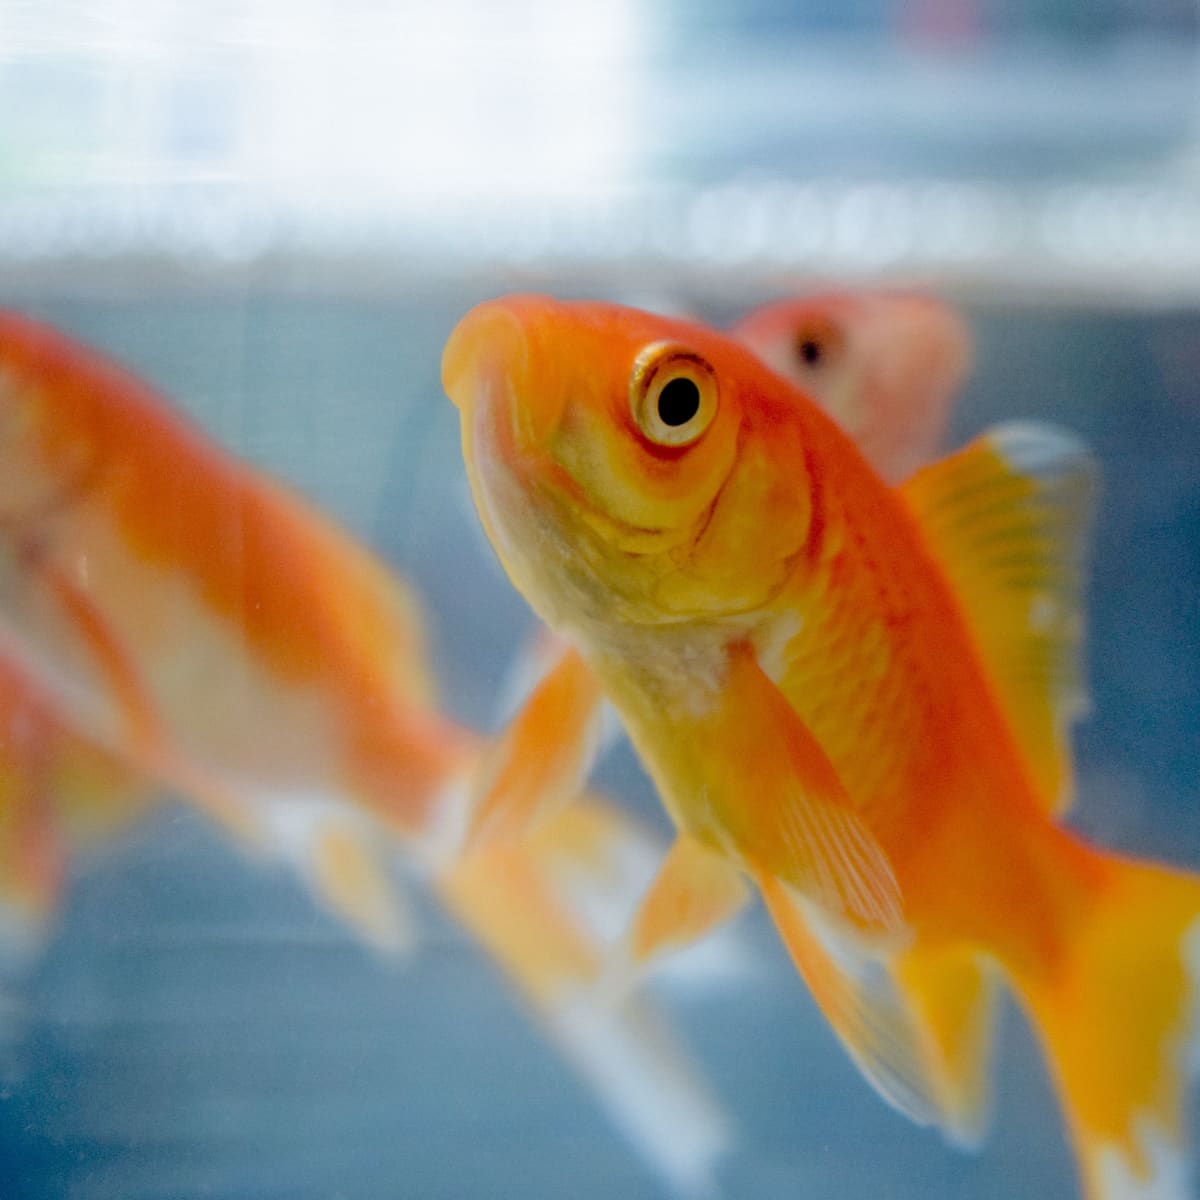 Pet Fish - Live Shrimp, Barb, Goldfish, Minnows, Betta & Cichlids